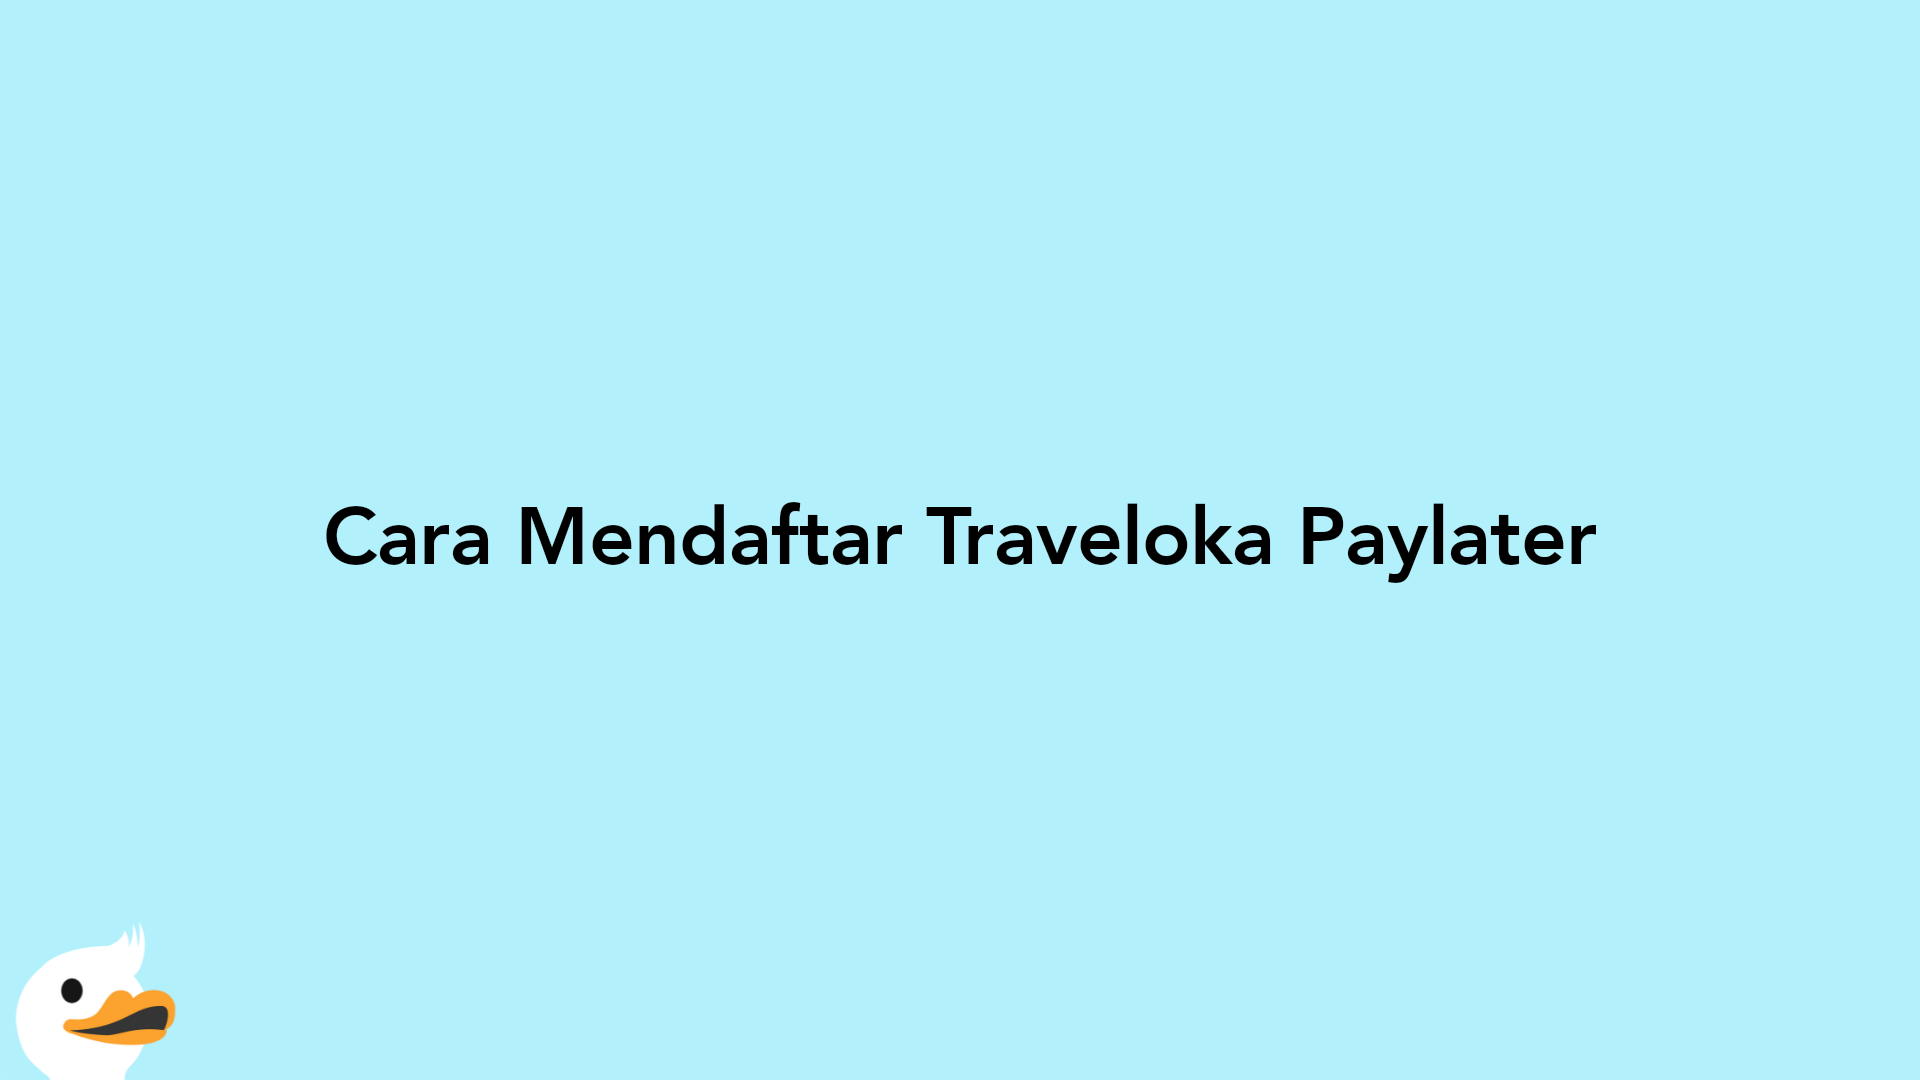 Cara Mendaftar Traveloka Paylater